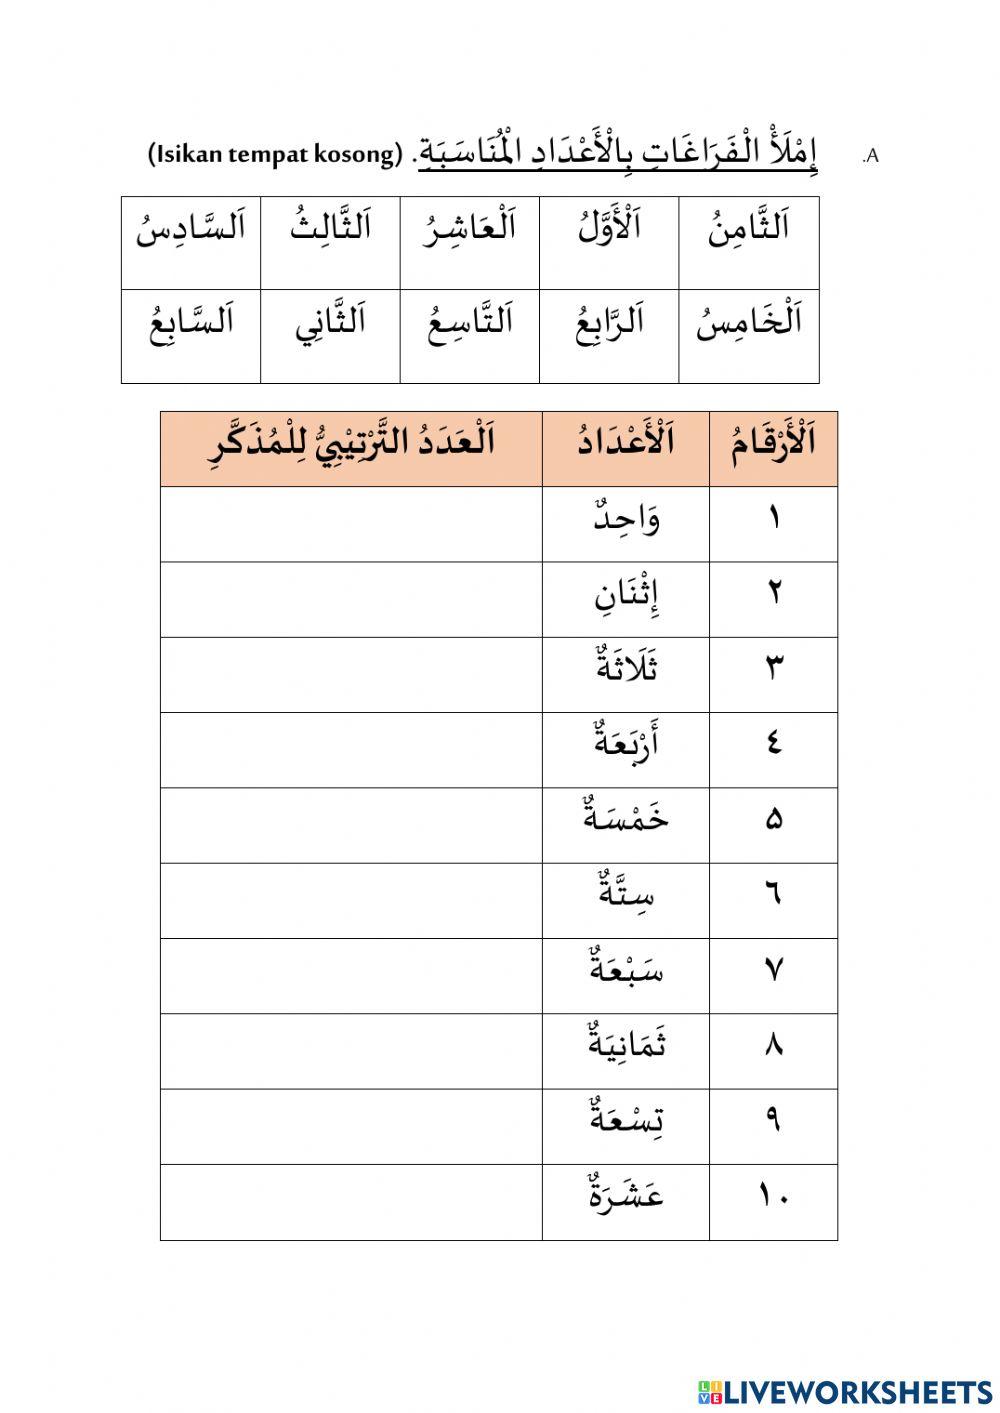 Latihan Bahasa Arab Tahun 6 (Minggu 17)